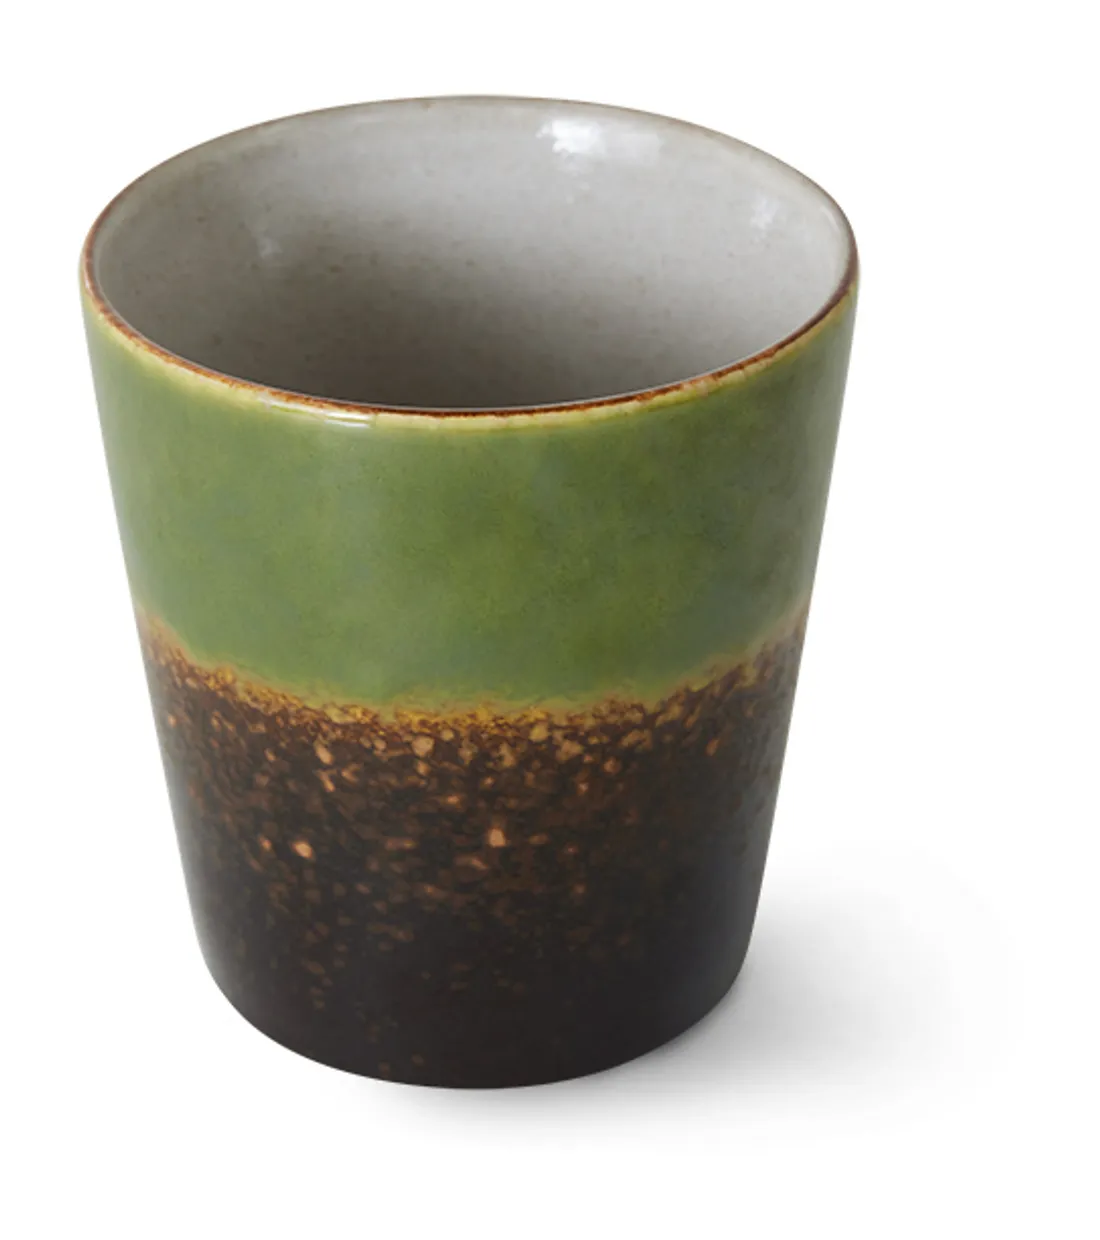 70s ceramics: coffee mug, algae